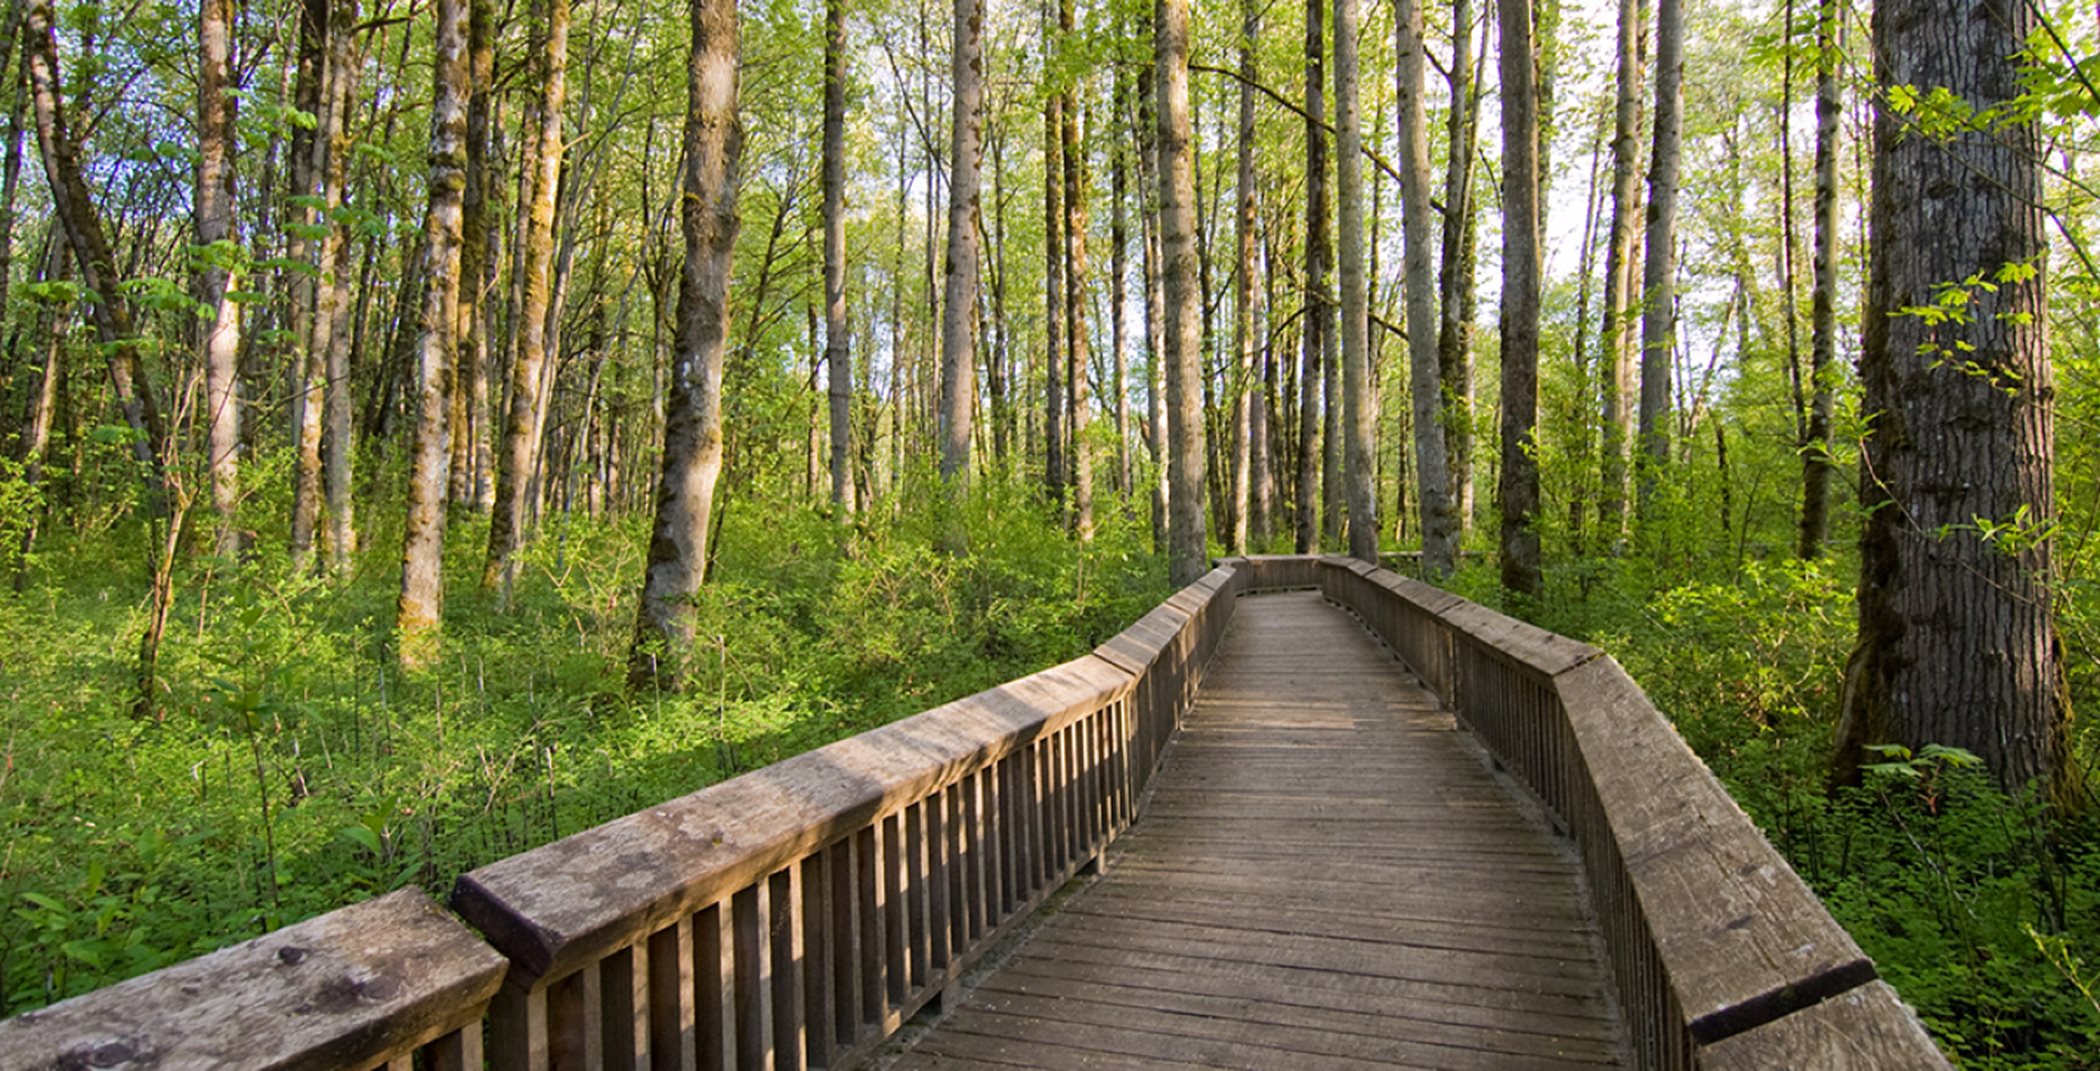 Wooden bridge going through a tree dense forest in daylight